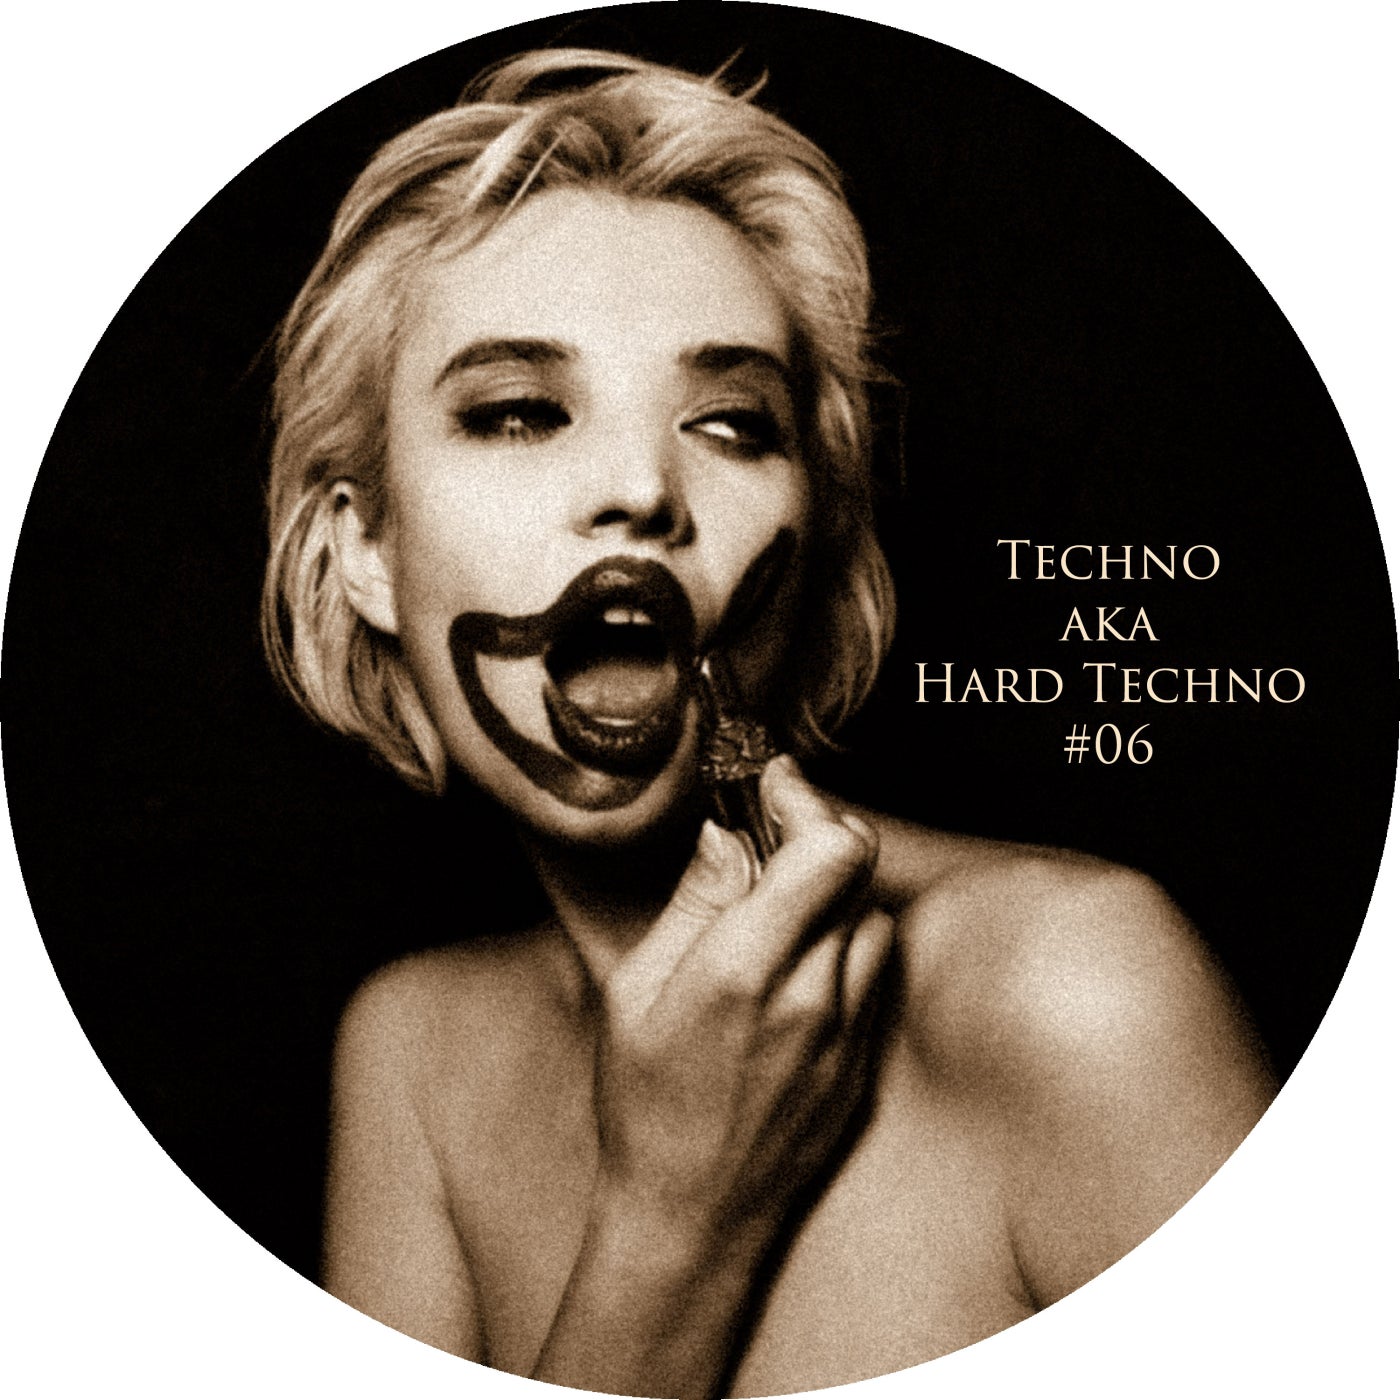 Techno Aka Hard Techno #06